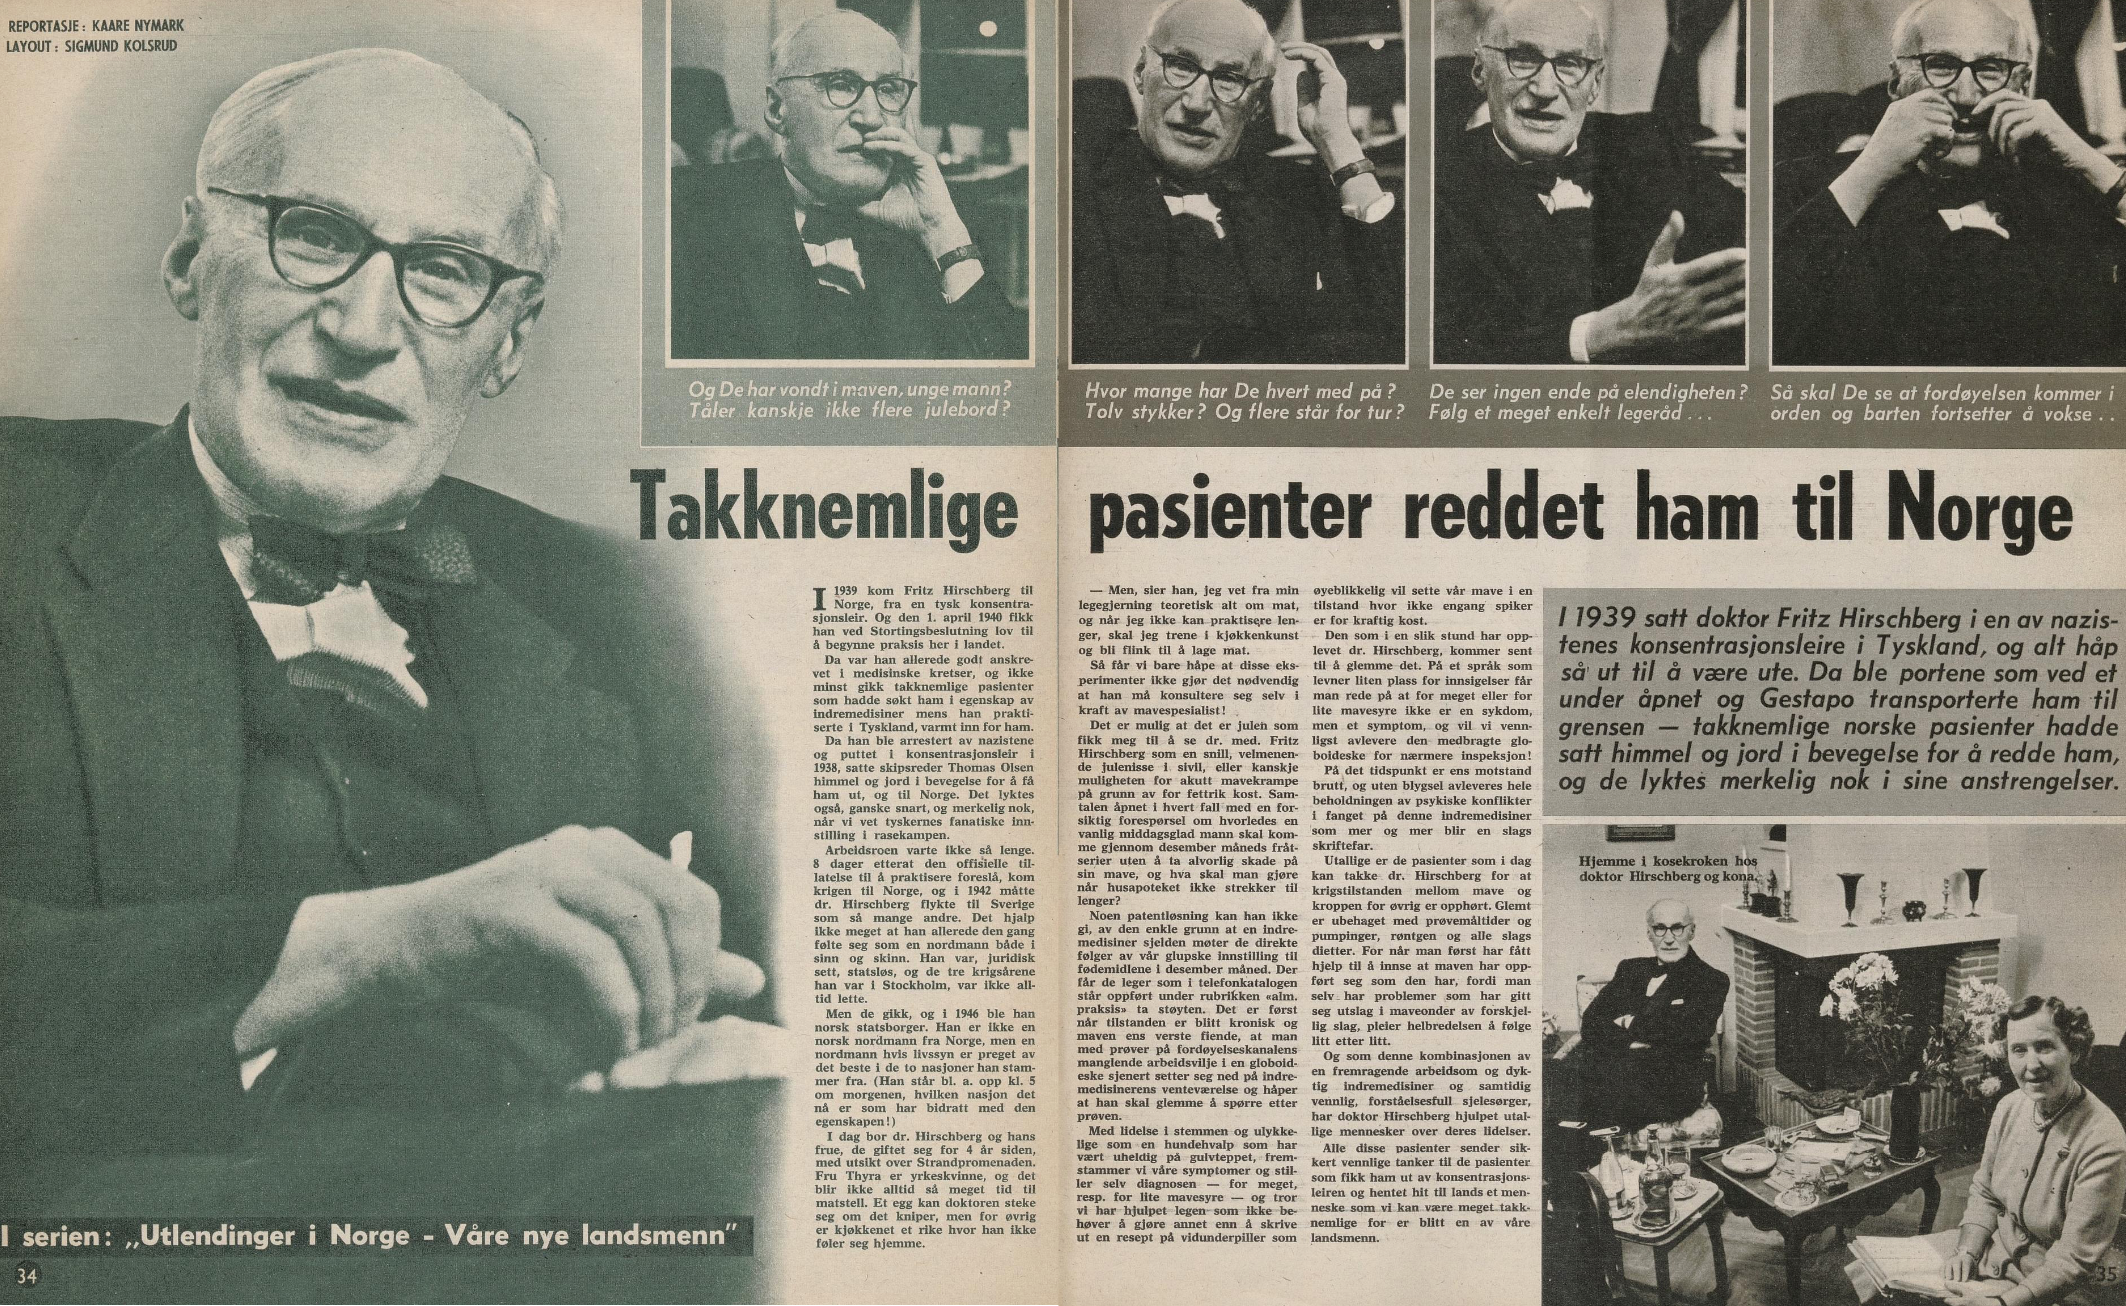 Dr. med. Fritz Hirschberg, 1950er Jahre in Norwegen © Norwegische Zeitung Billedjournalen Nr. 11 vom 21. Dezember 1959